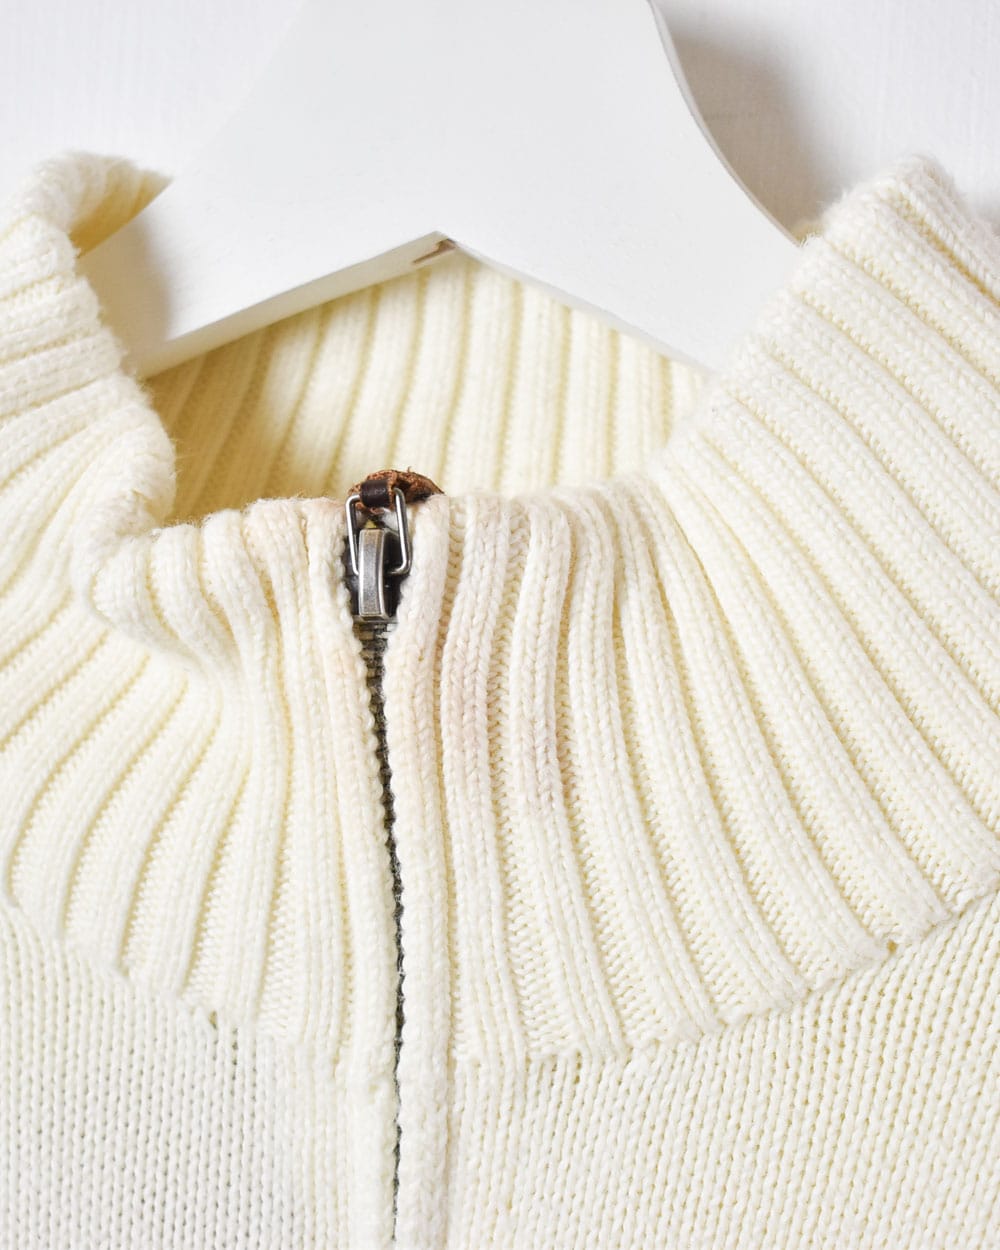 Neutral Polo Ralph Lauren Knitted 1/4 Zip Sweatshirt - Medium